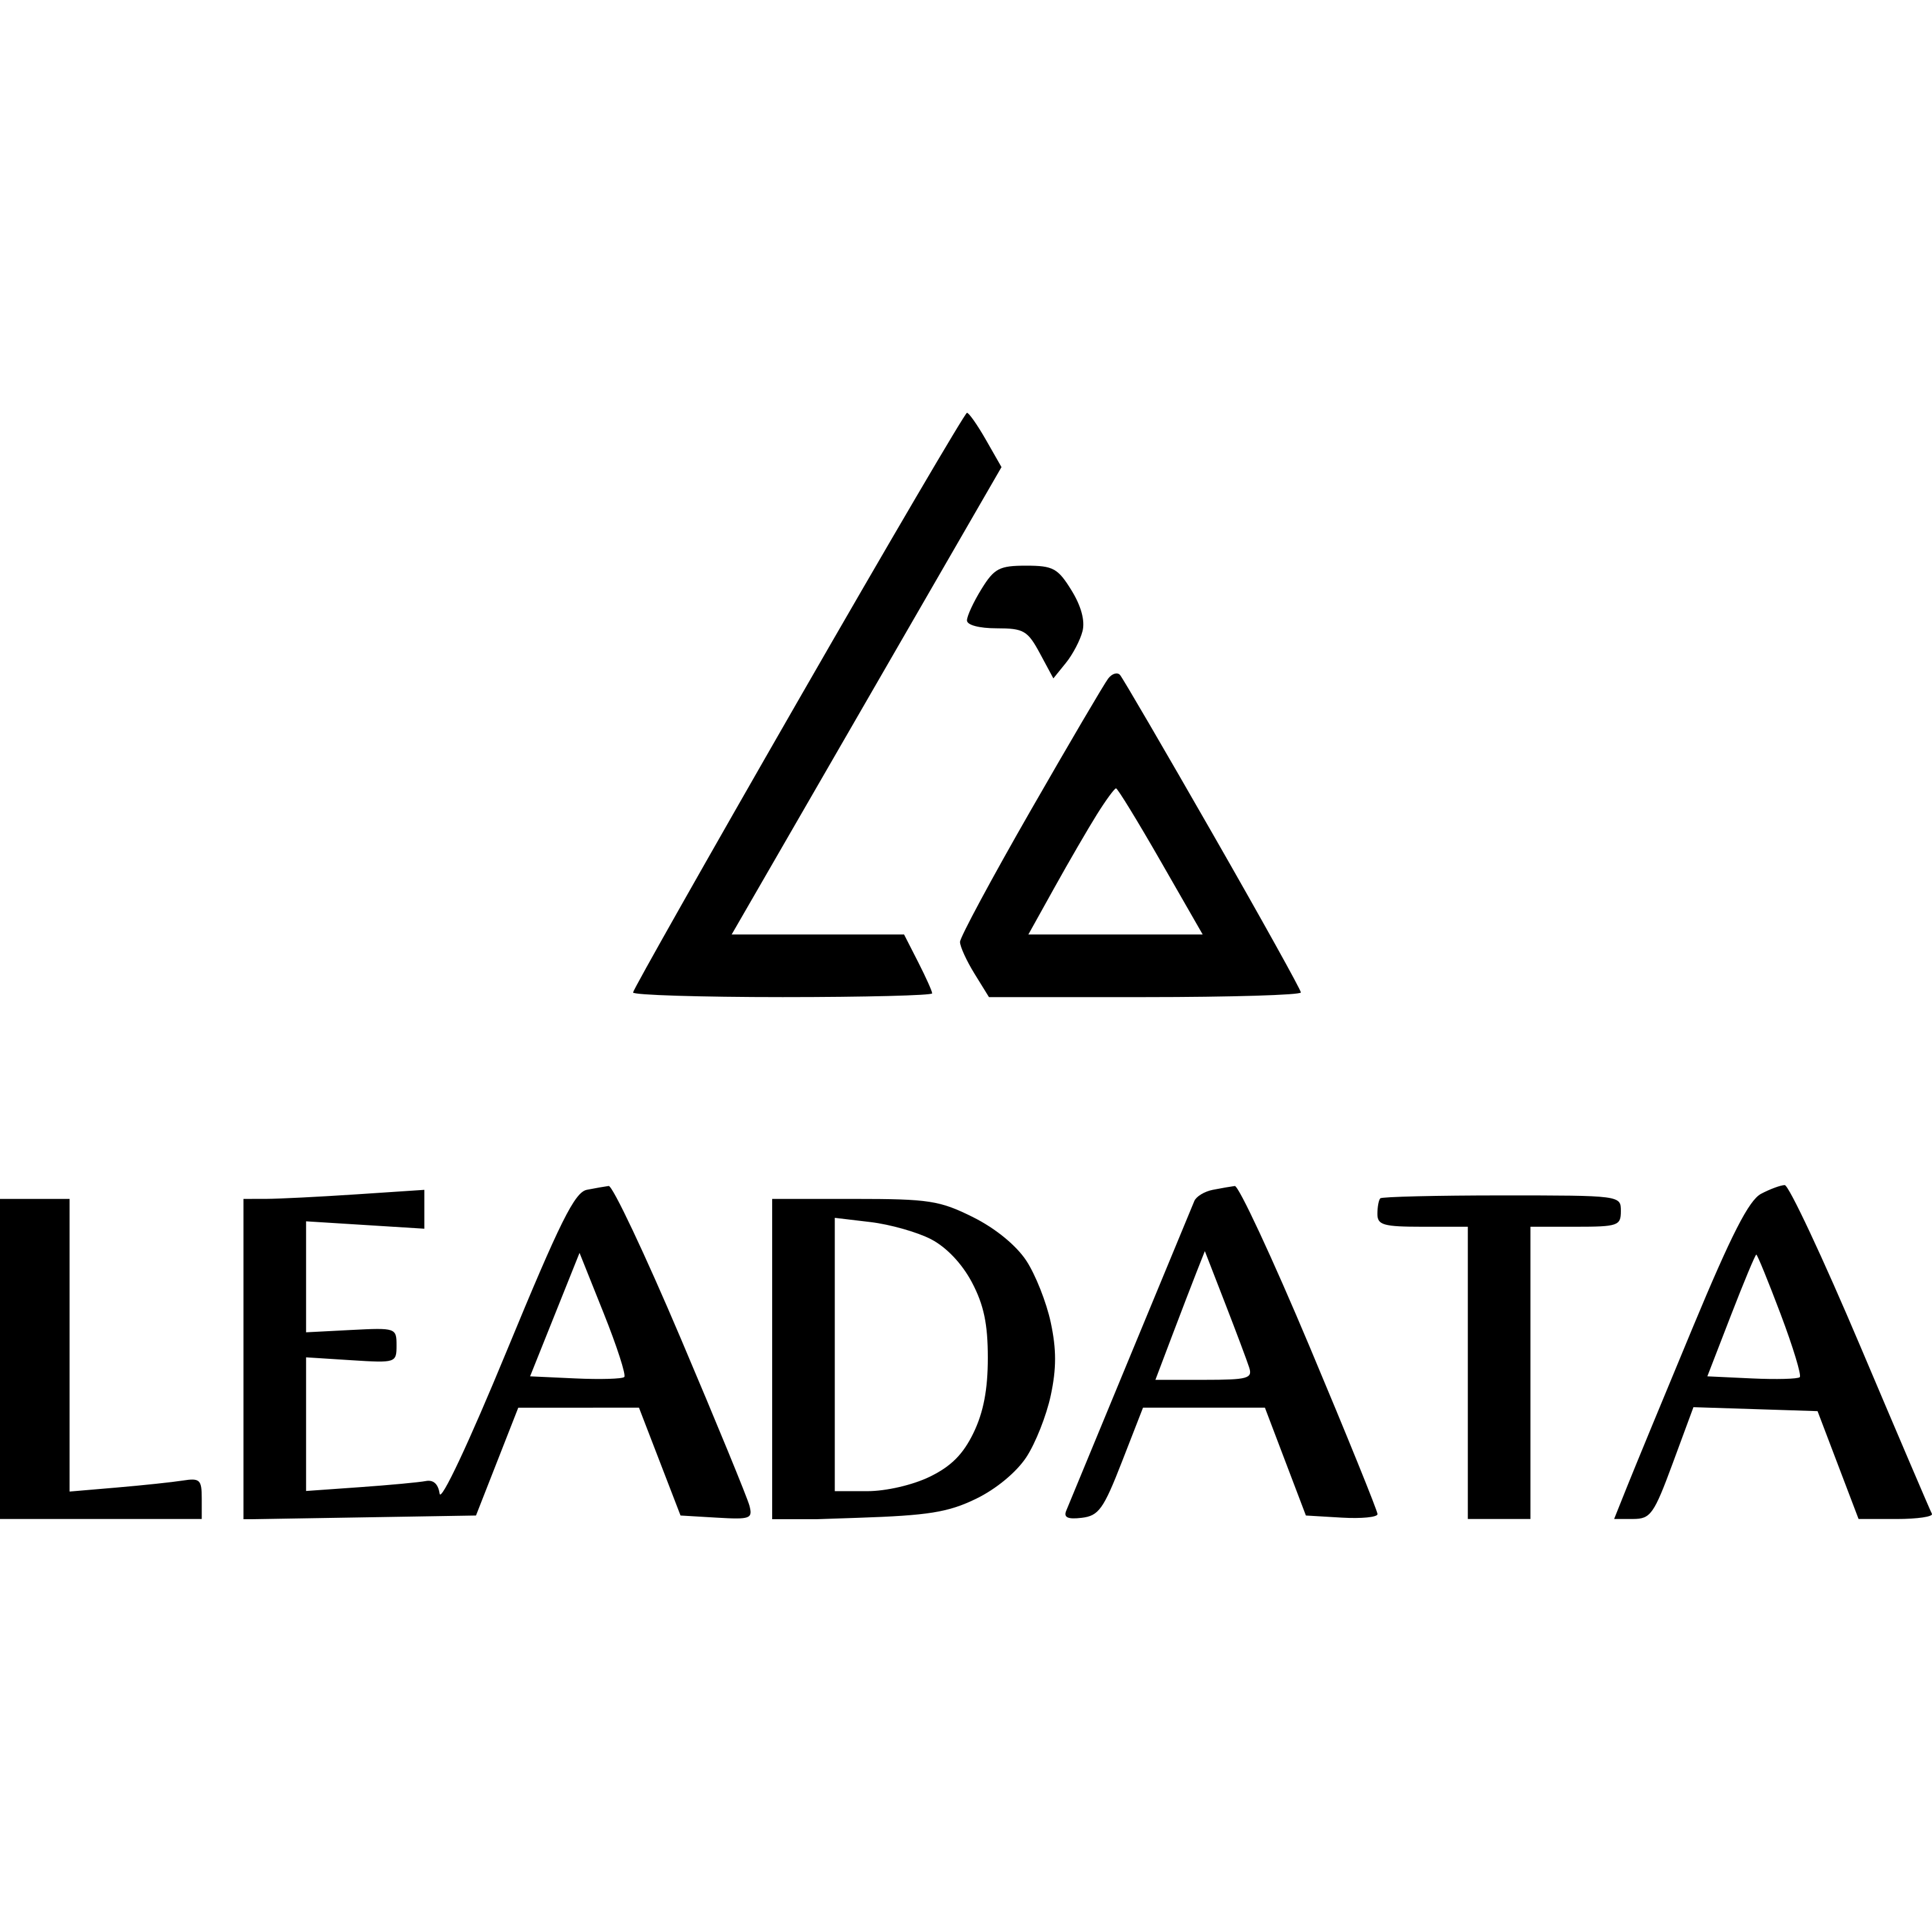 Lead Data Logo  Transparent Image